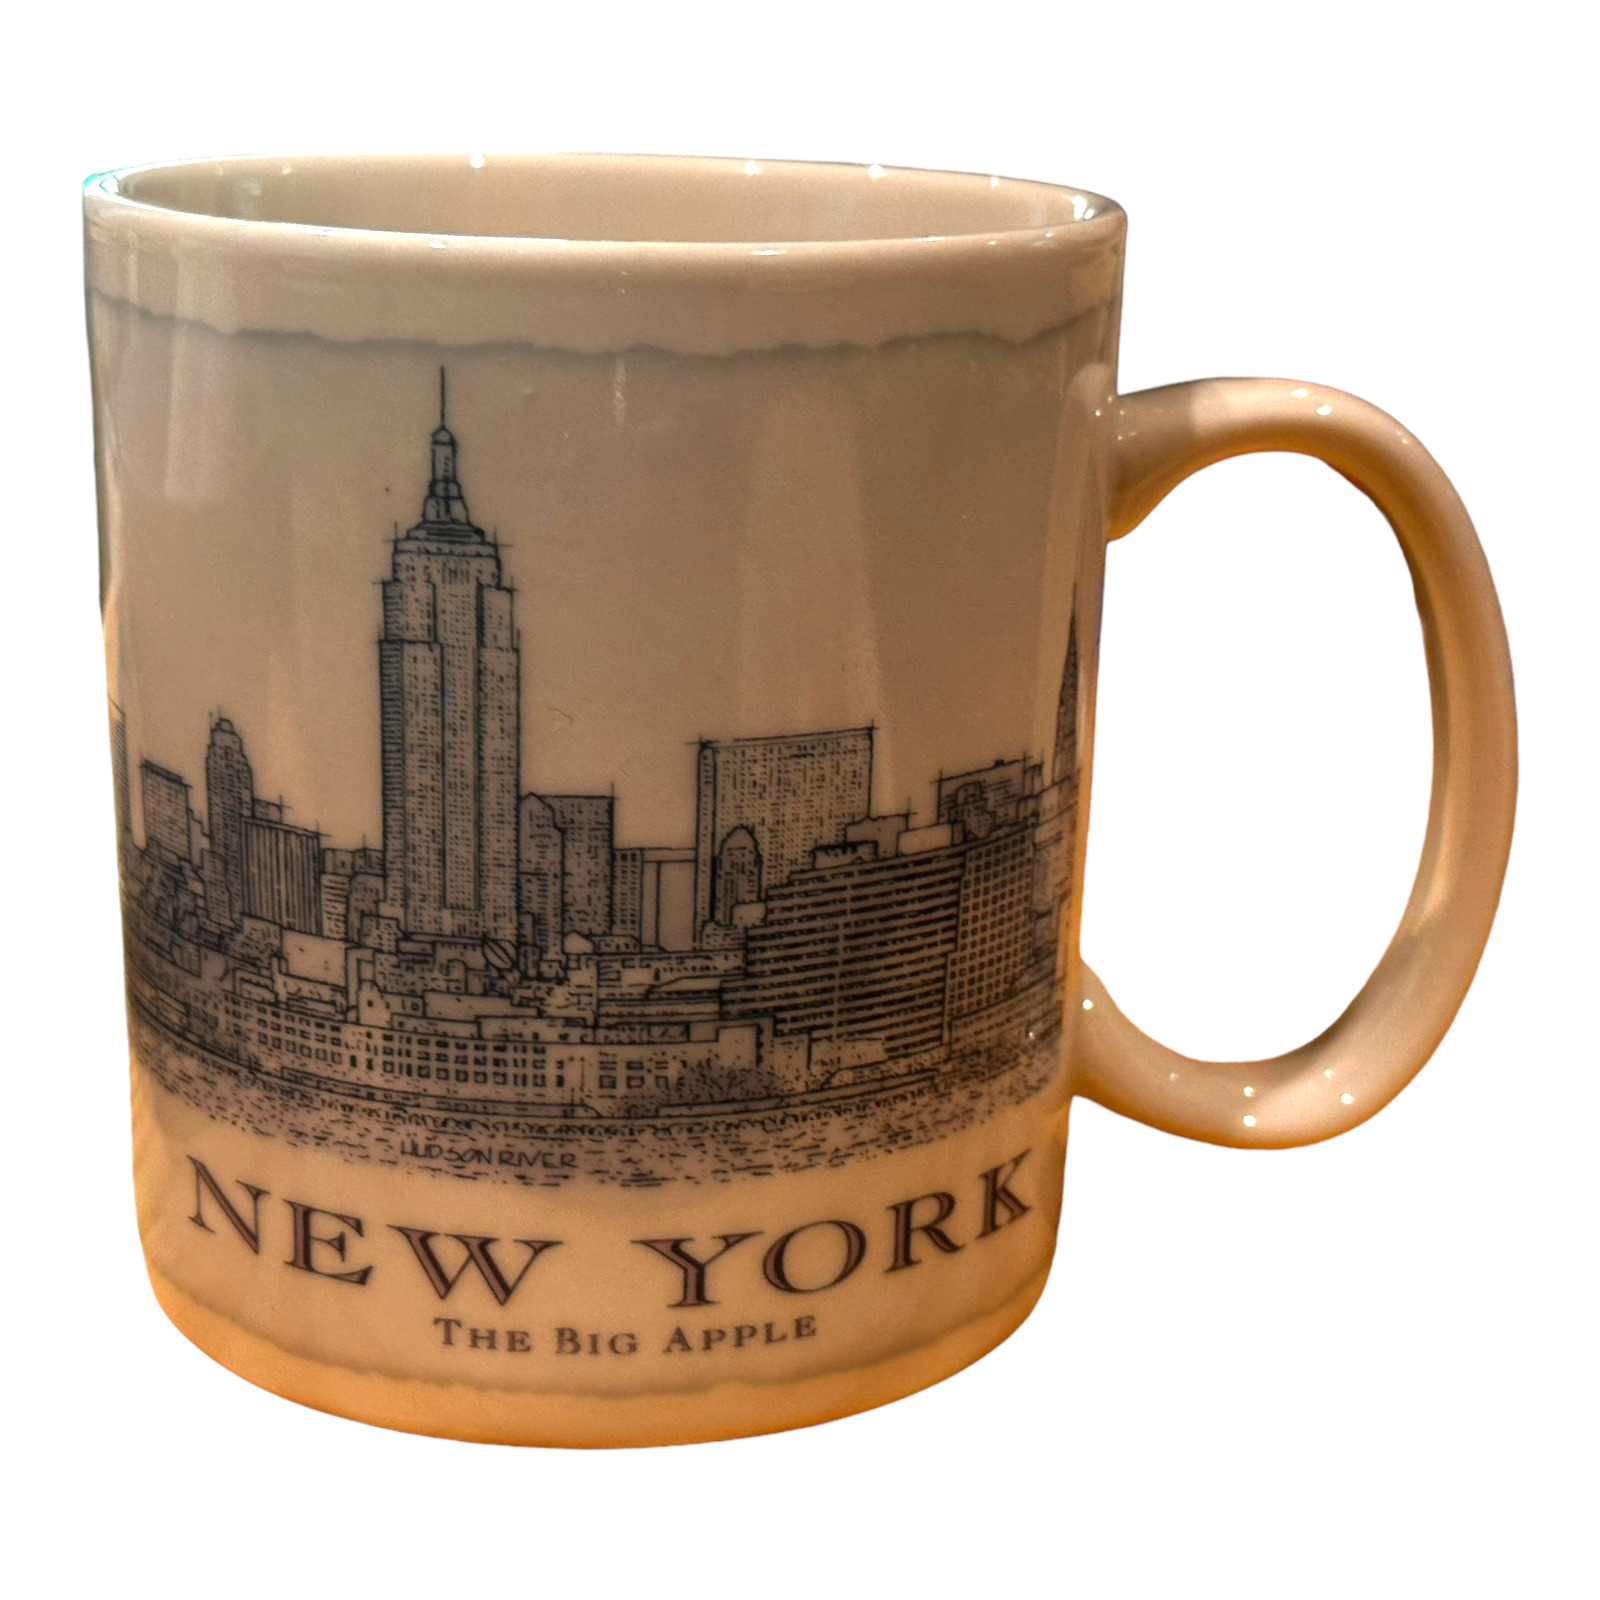 Starbucks Architect Series NEW YORK The Big Apple 2010 Coffee Mug, 18oz